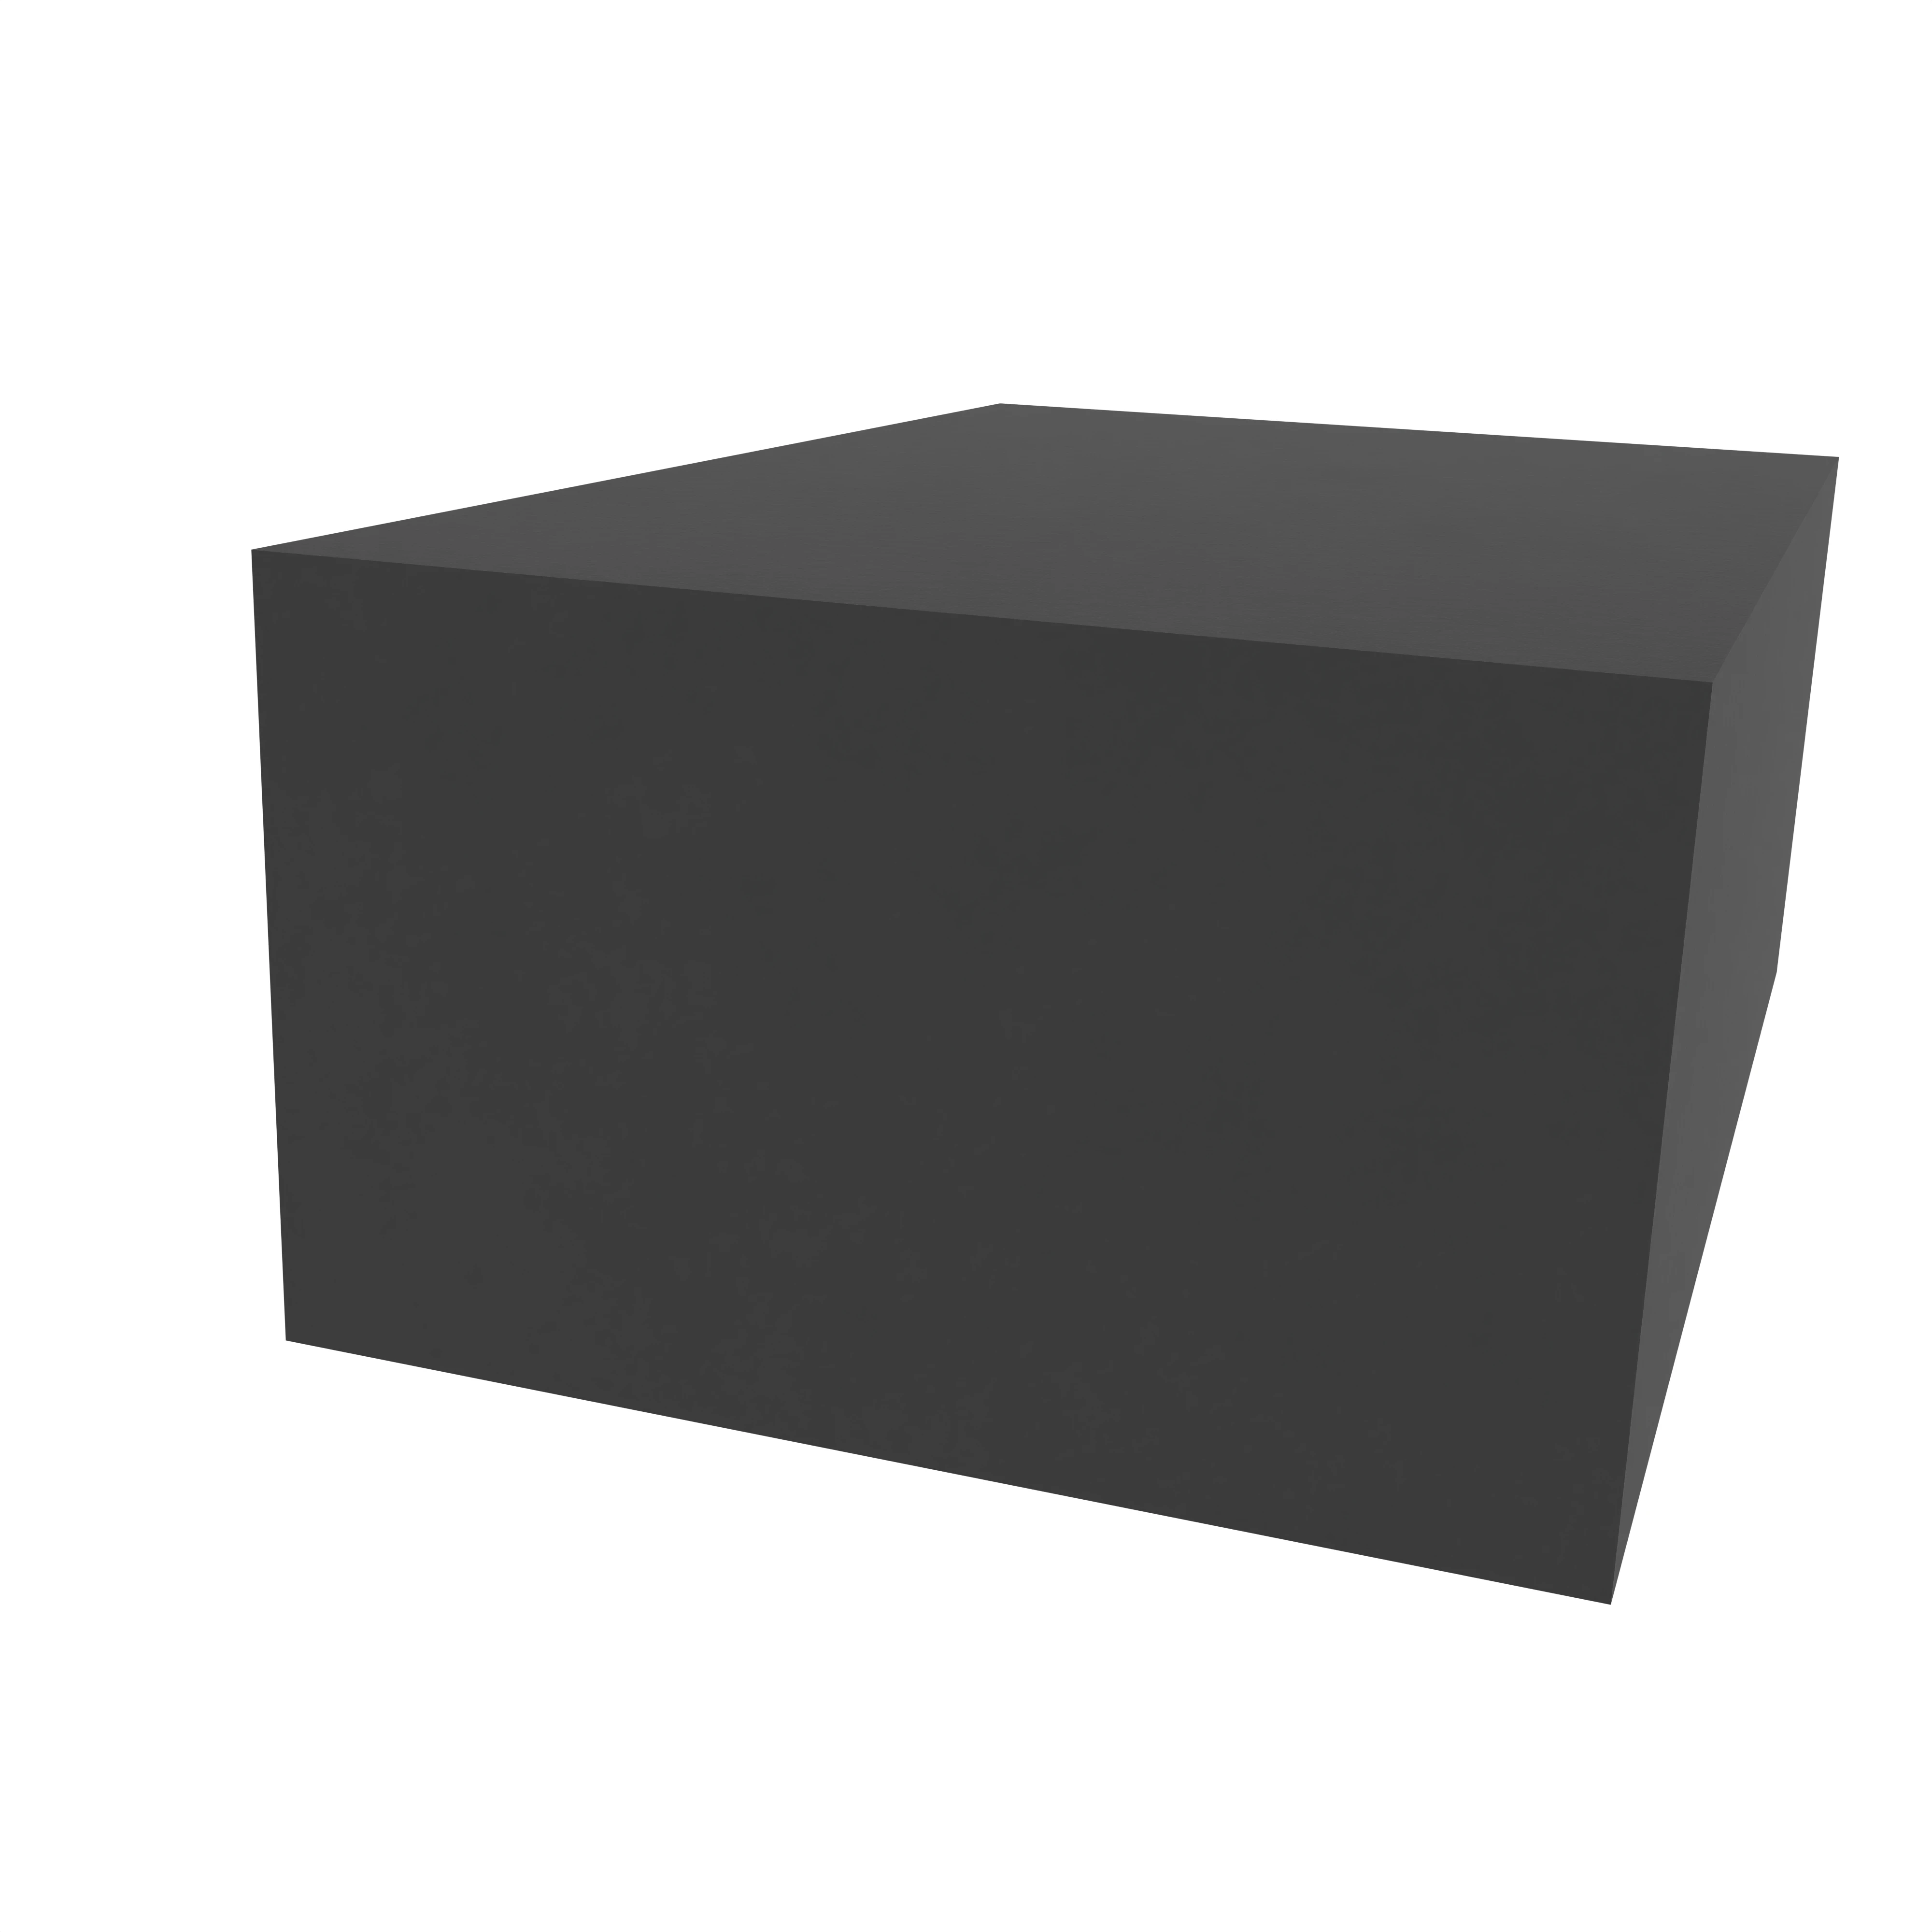 Moosgummidichtung vierkant | 25 mm Höhe | Farbe: schwarz